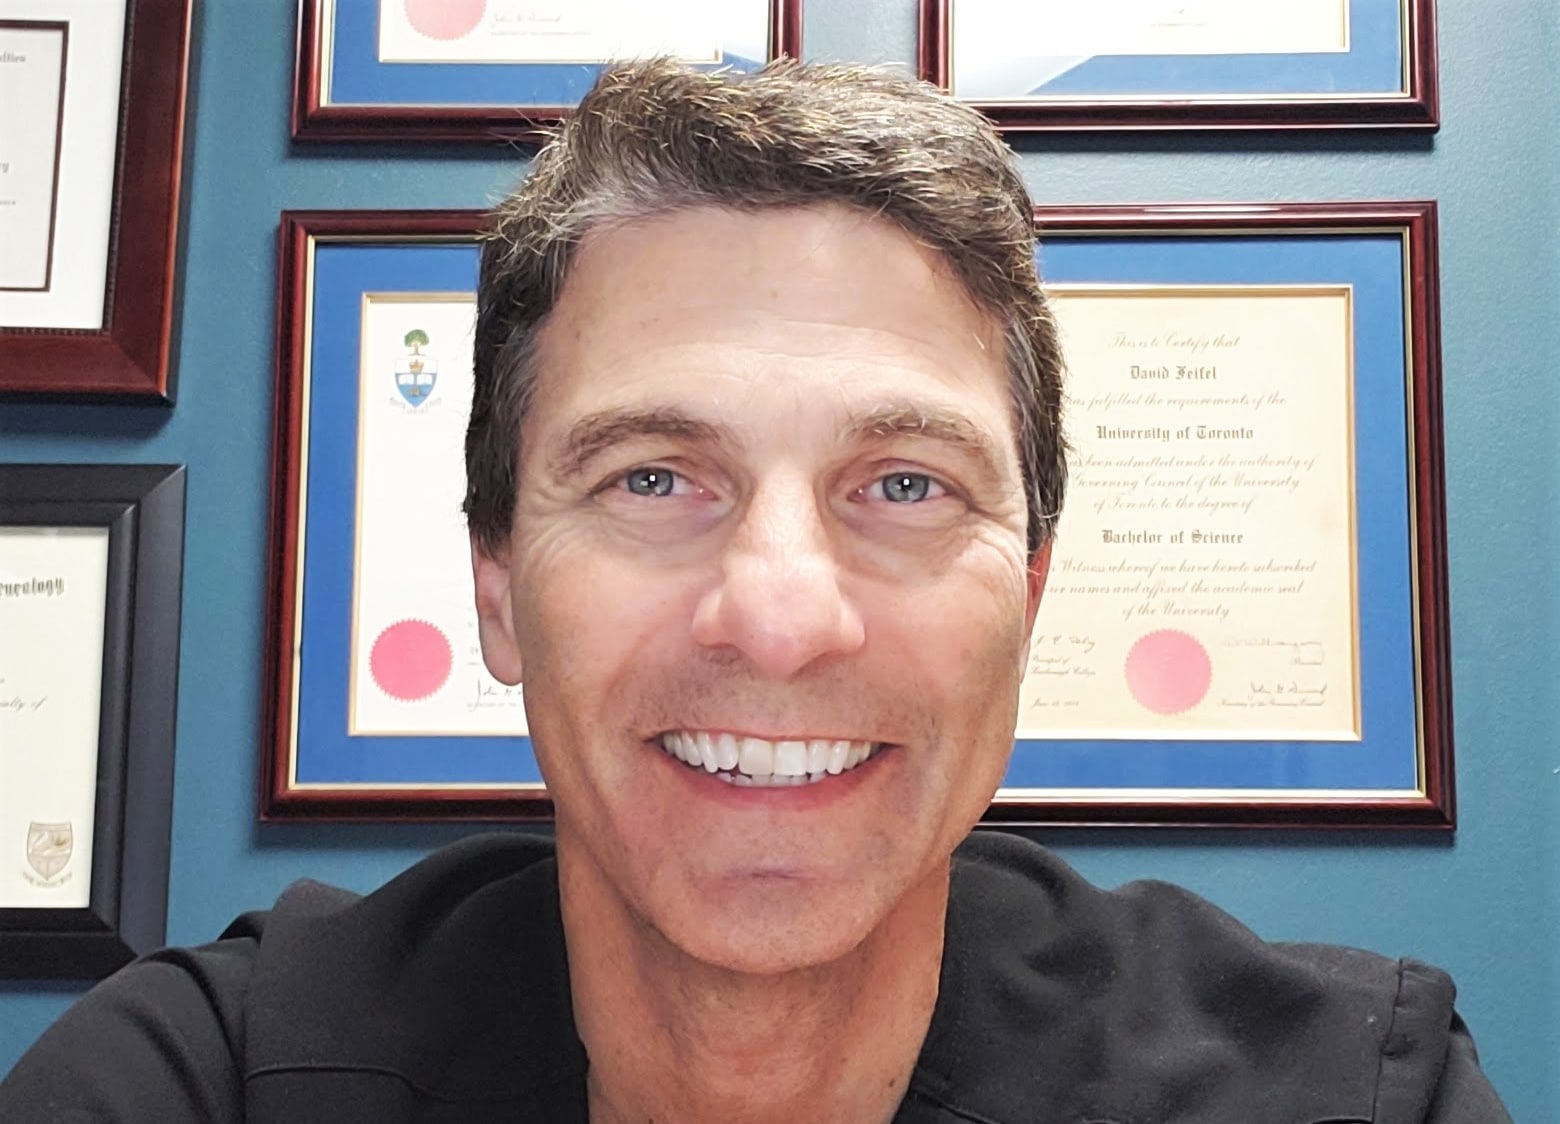 Dr David Feifel, Professor of Psychiatry at University of California, San Diego